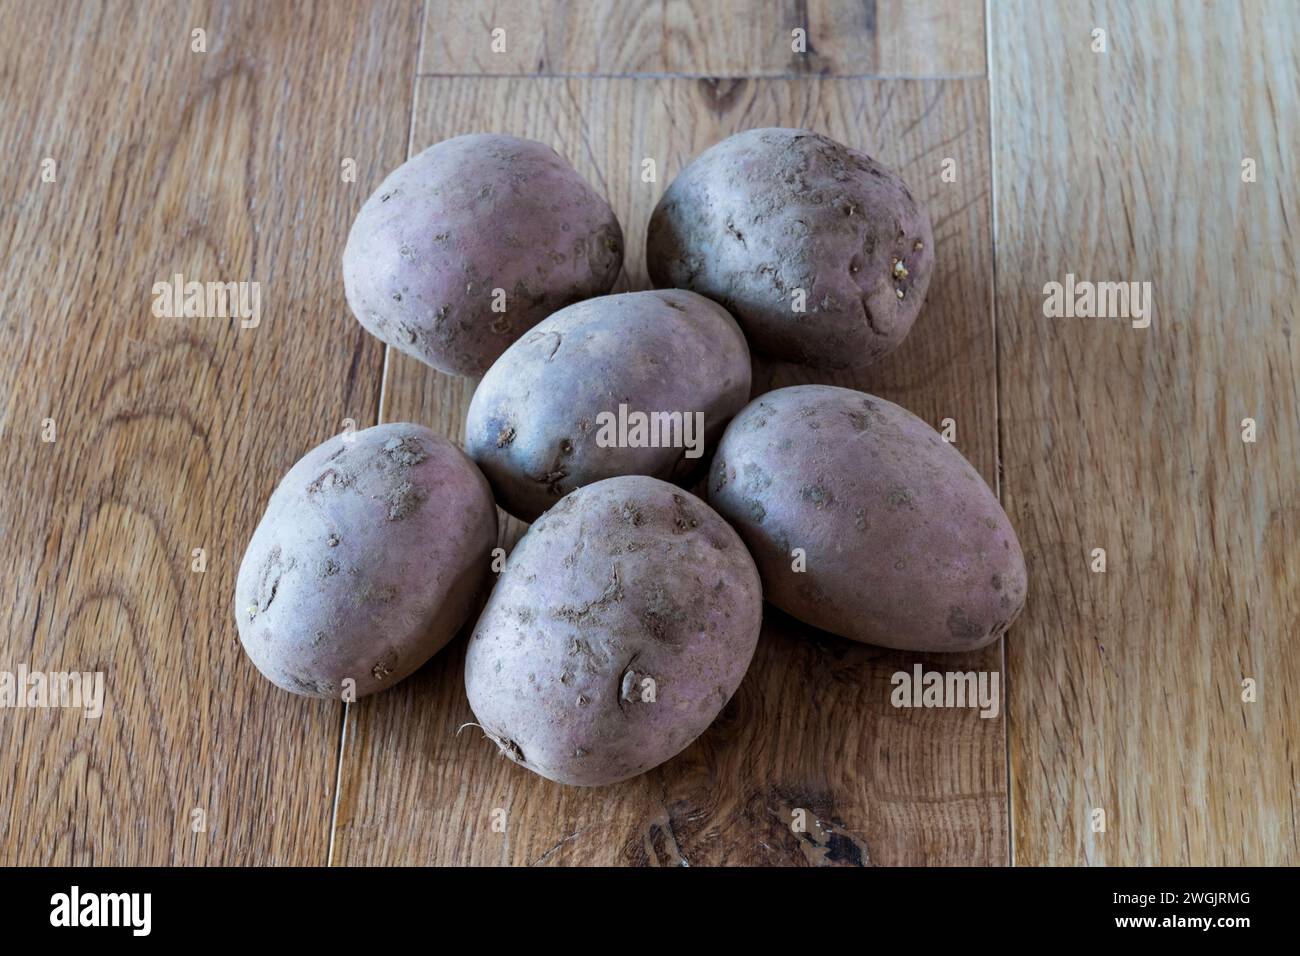 Setanta are a variety of maincrop seed potatoes. Stock Photo